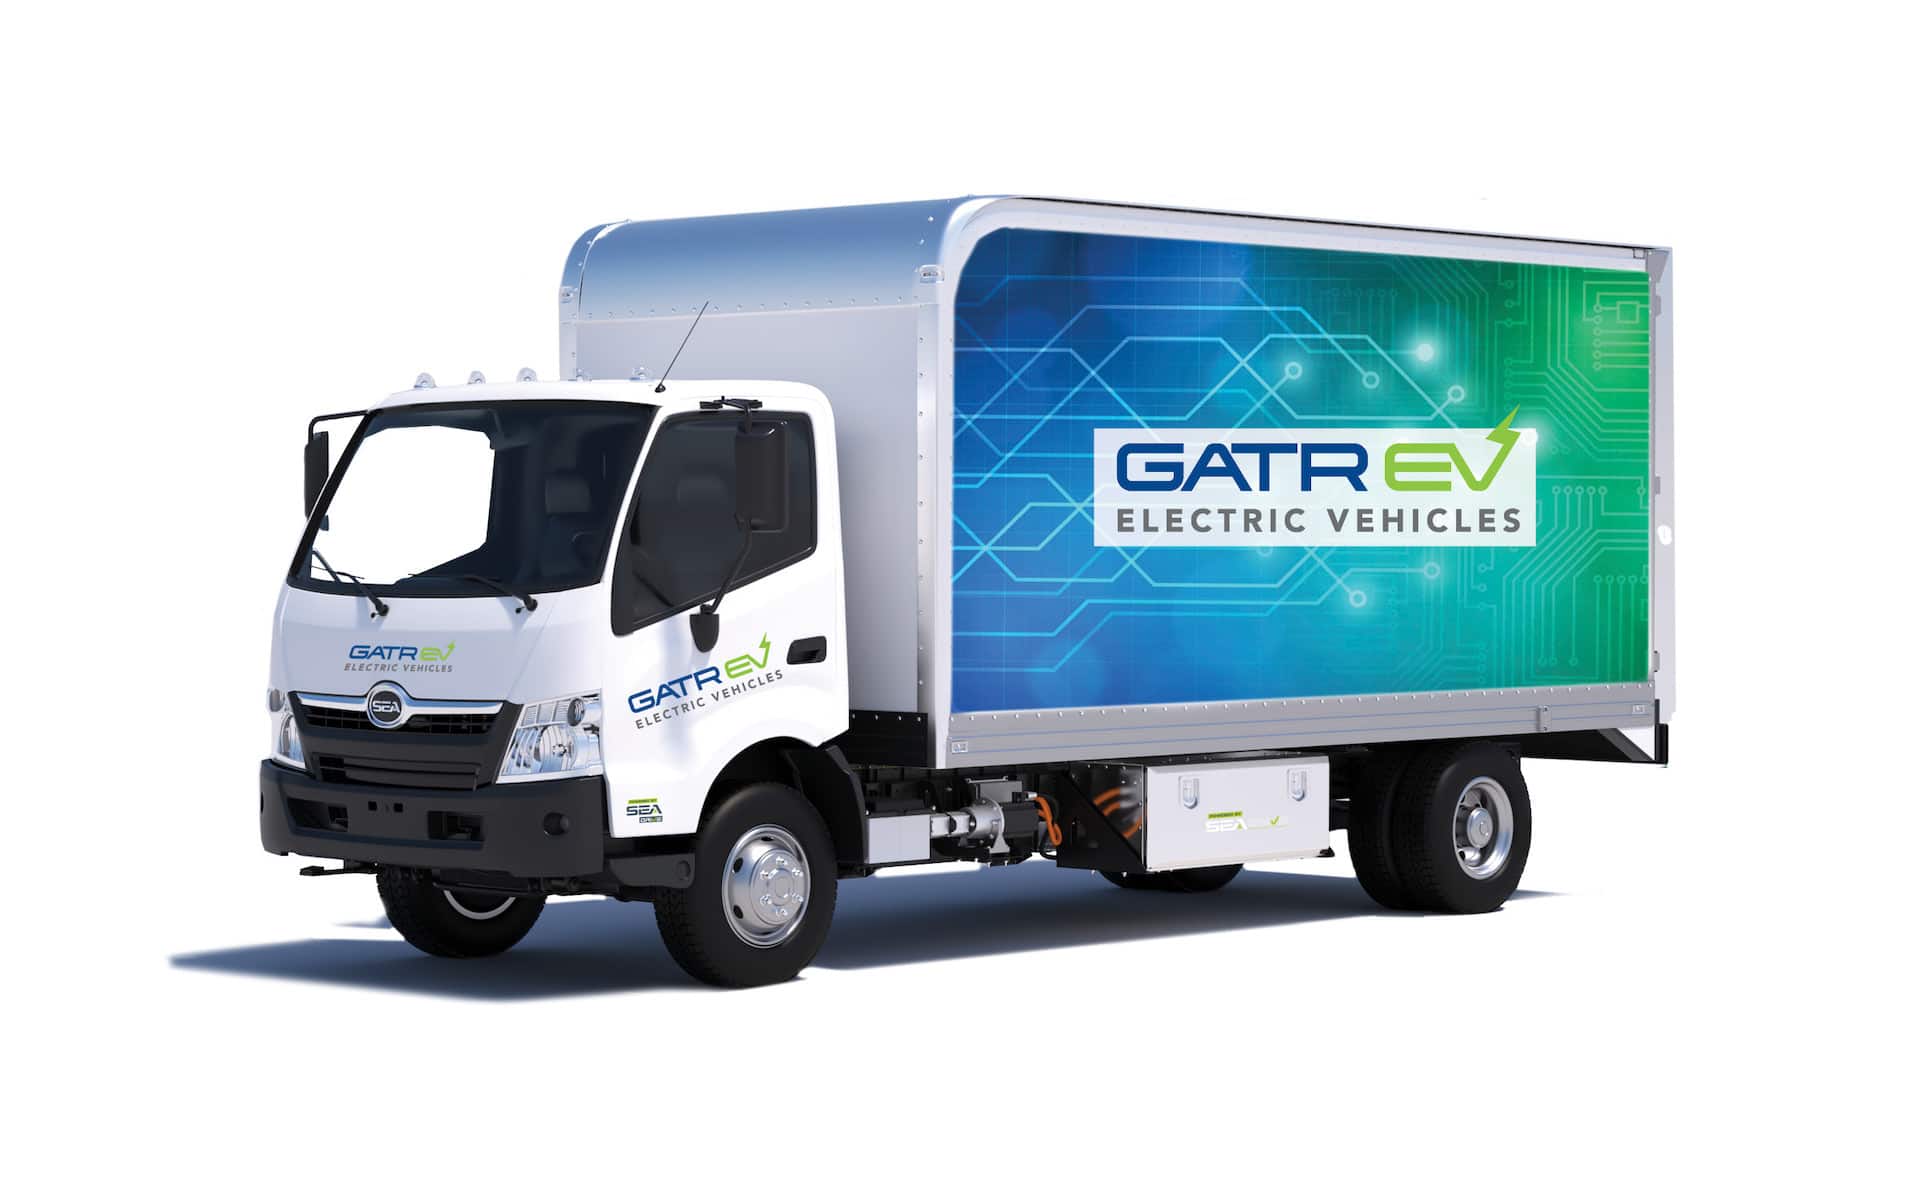 GATR EV Future Bound with Major Electric Truck Order